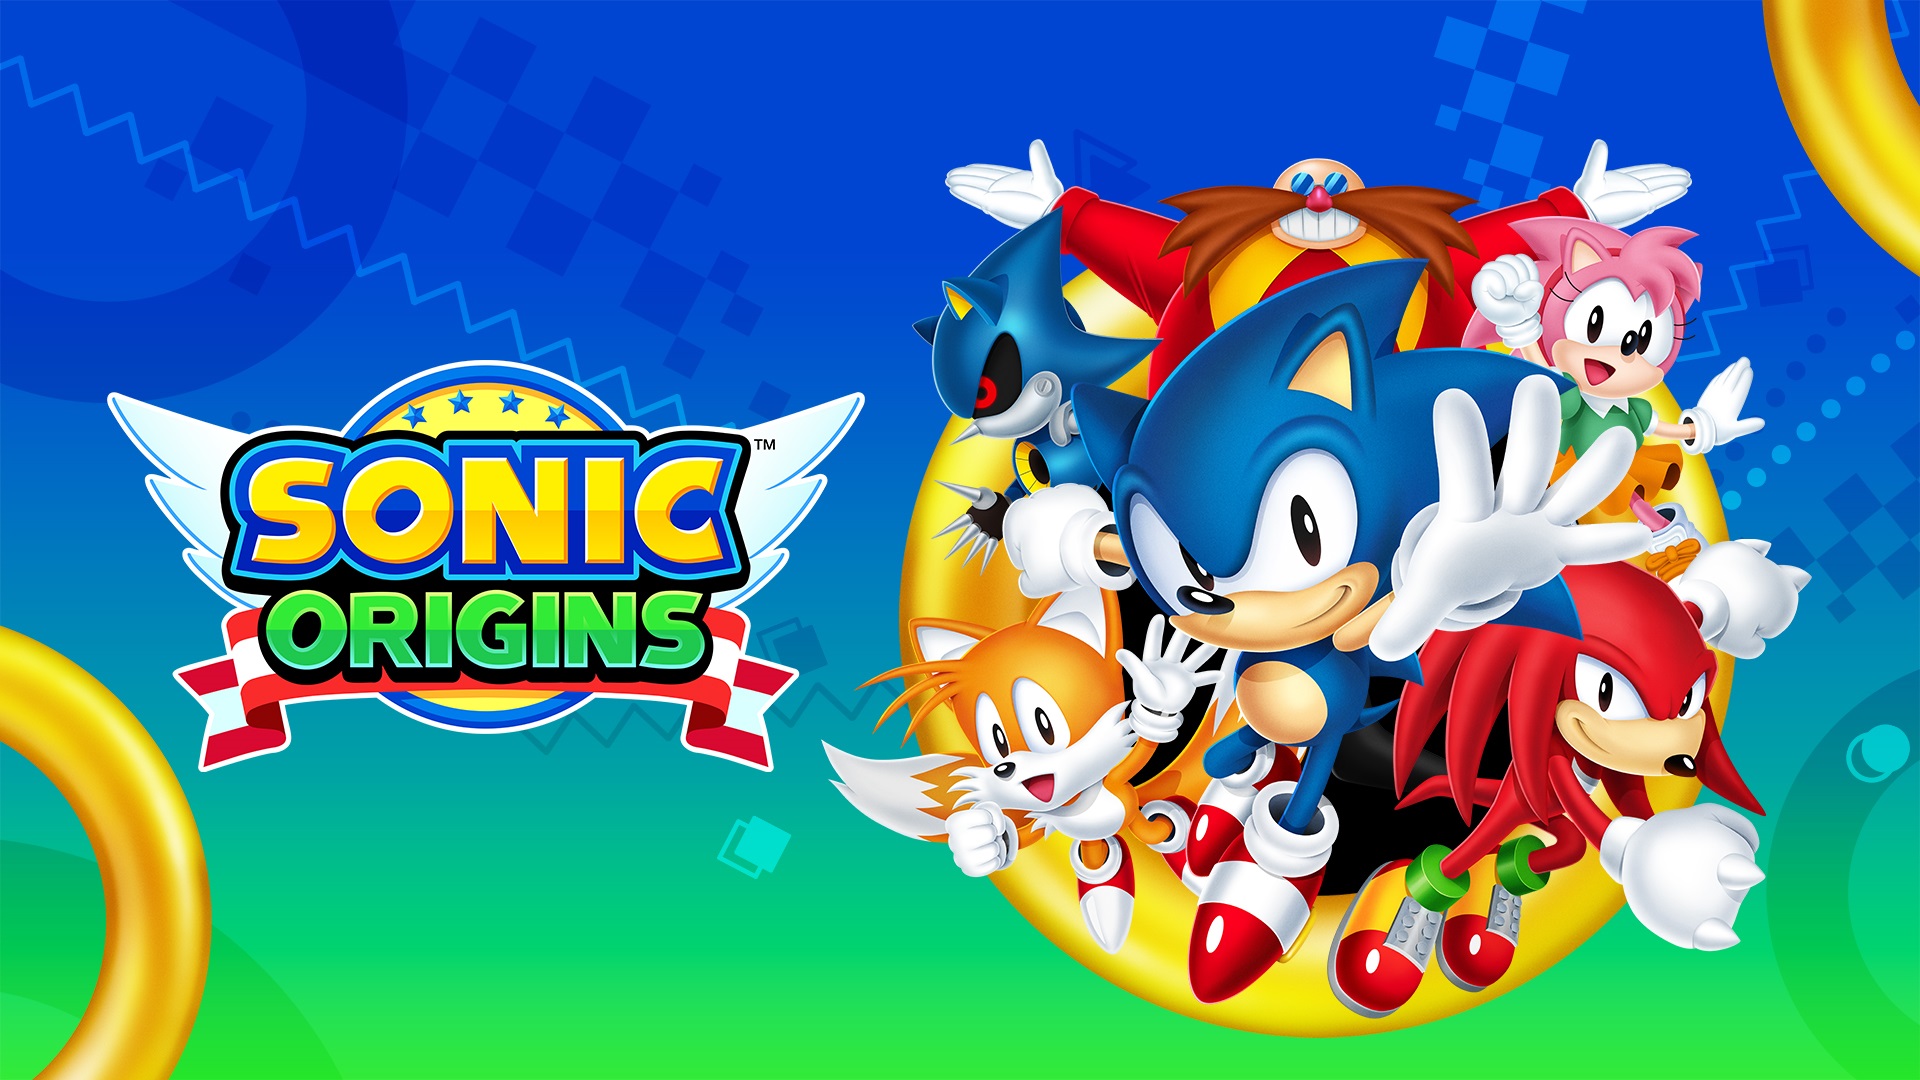 Sonic Origins release date